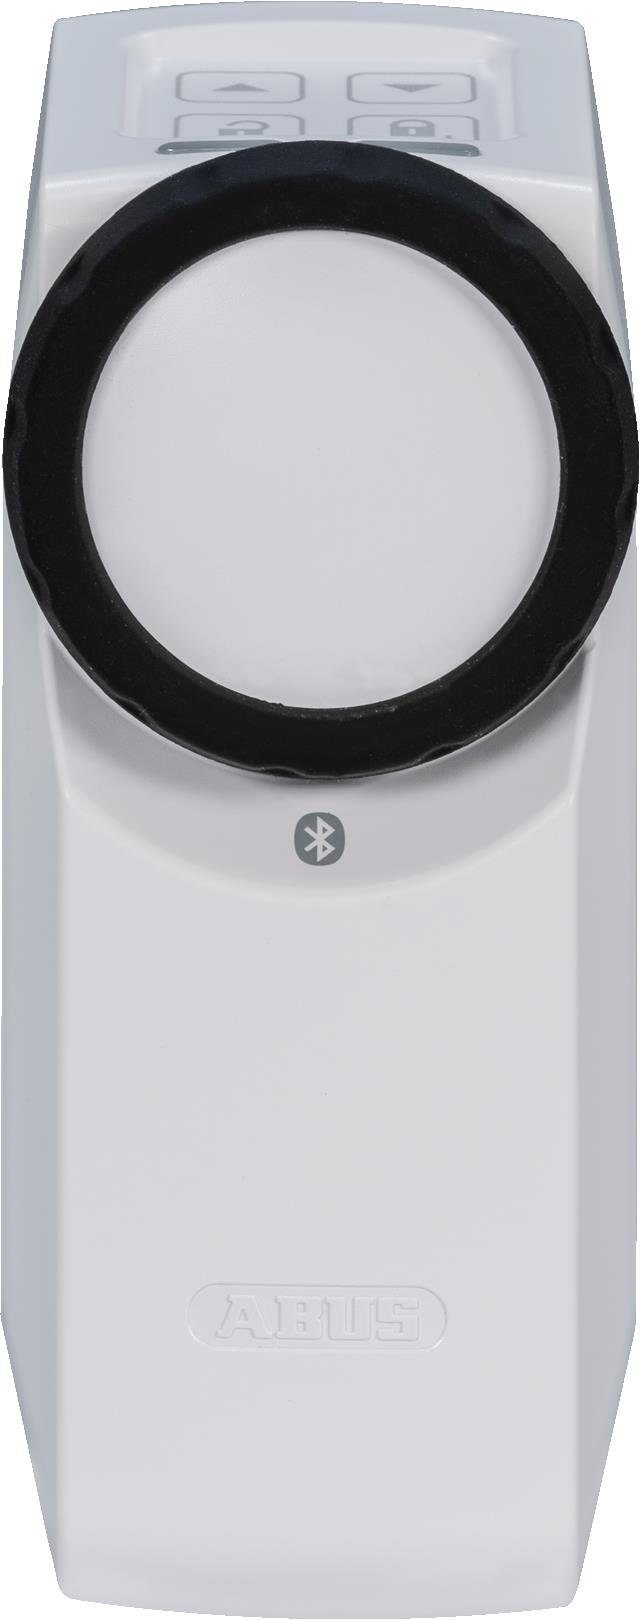 HomeTec ABUS Pro Abus Türschlossantrieb weiß Elektronisches Türschloss W Bluetooth CFA3100